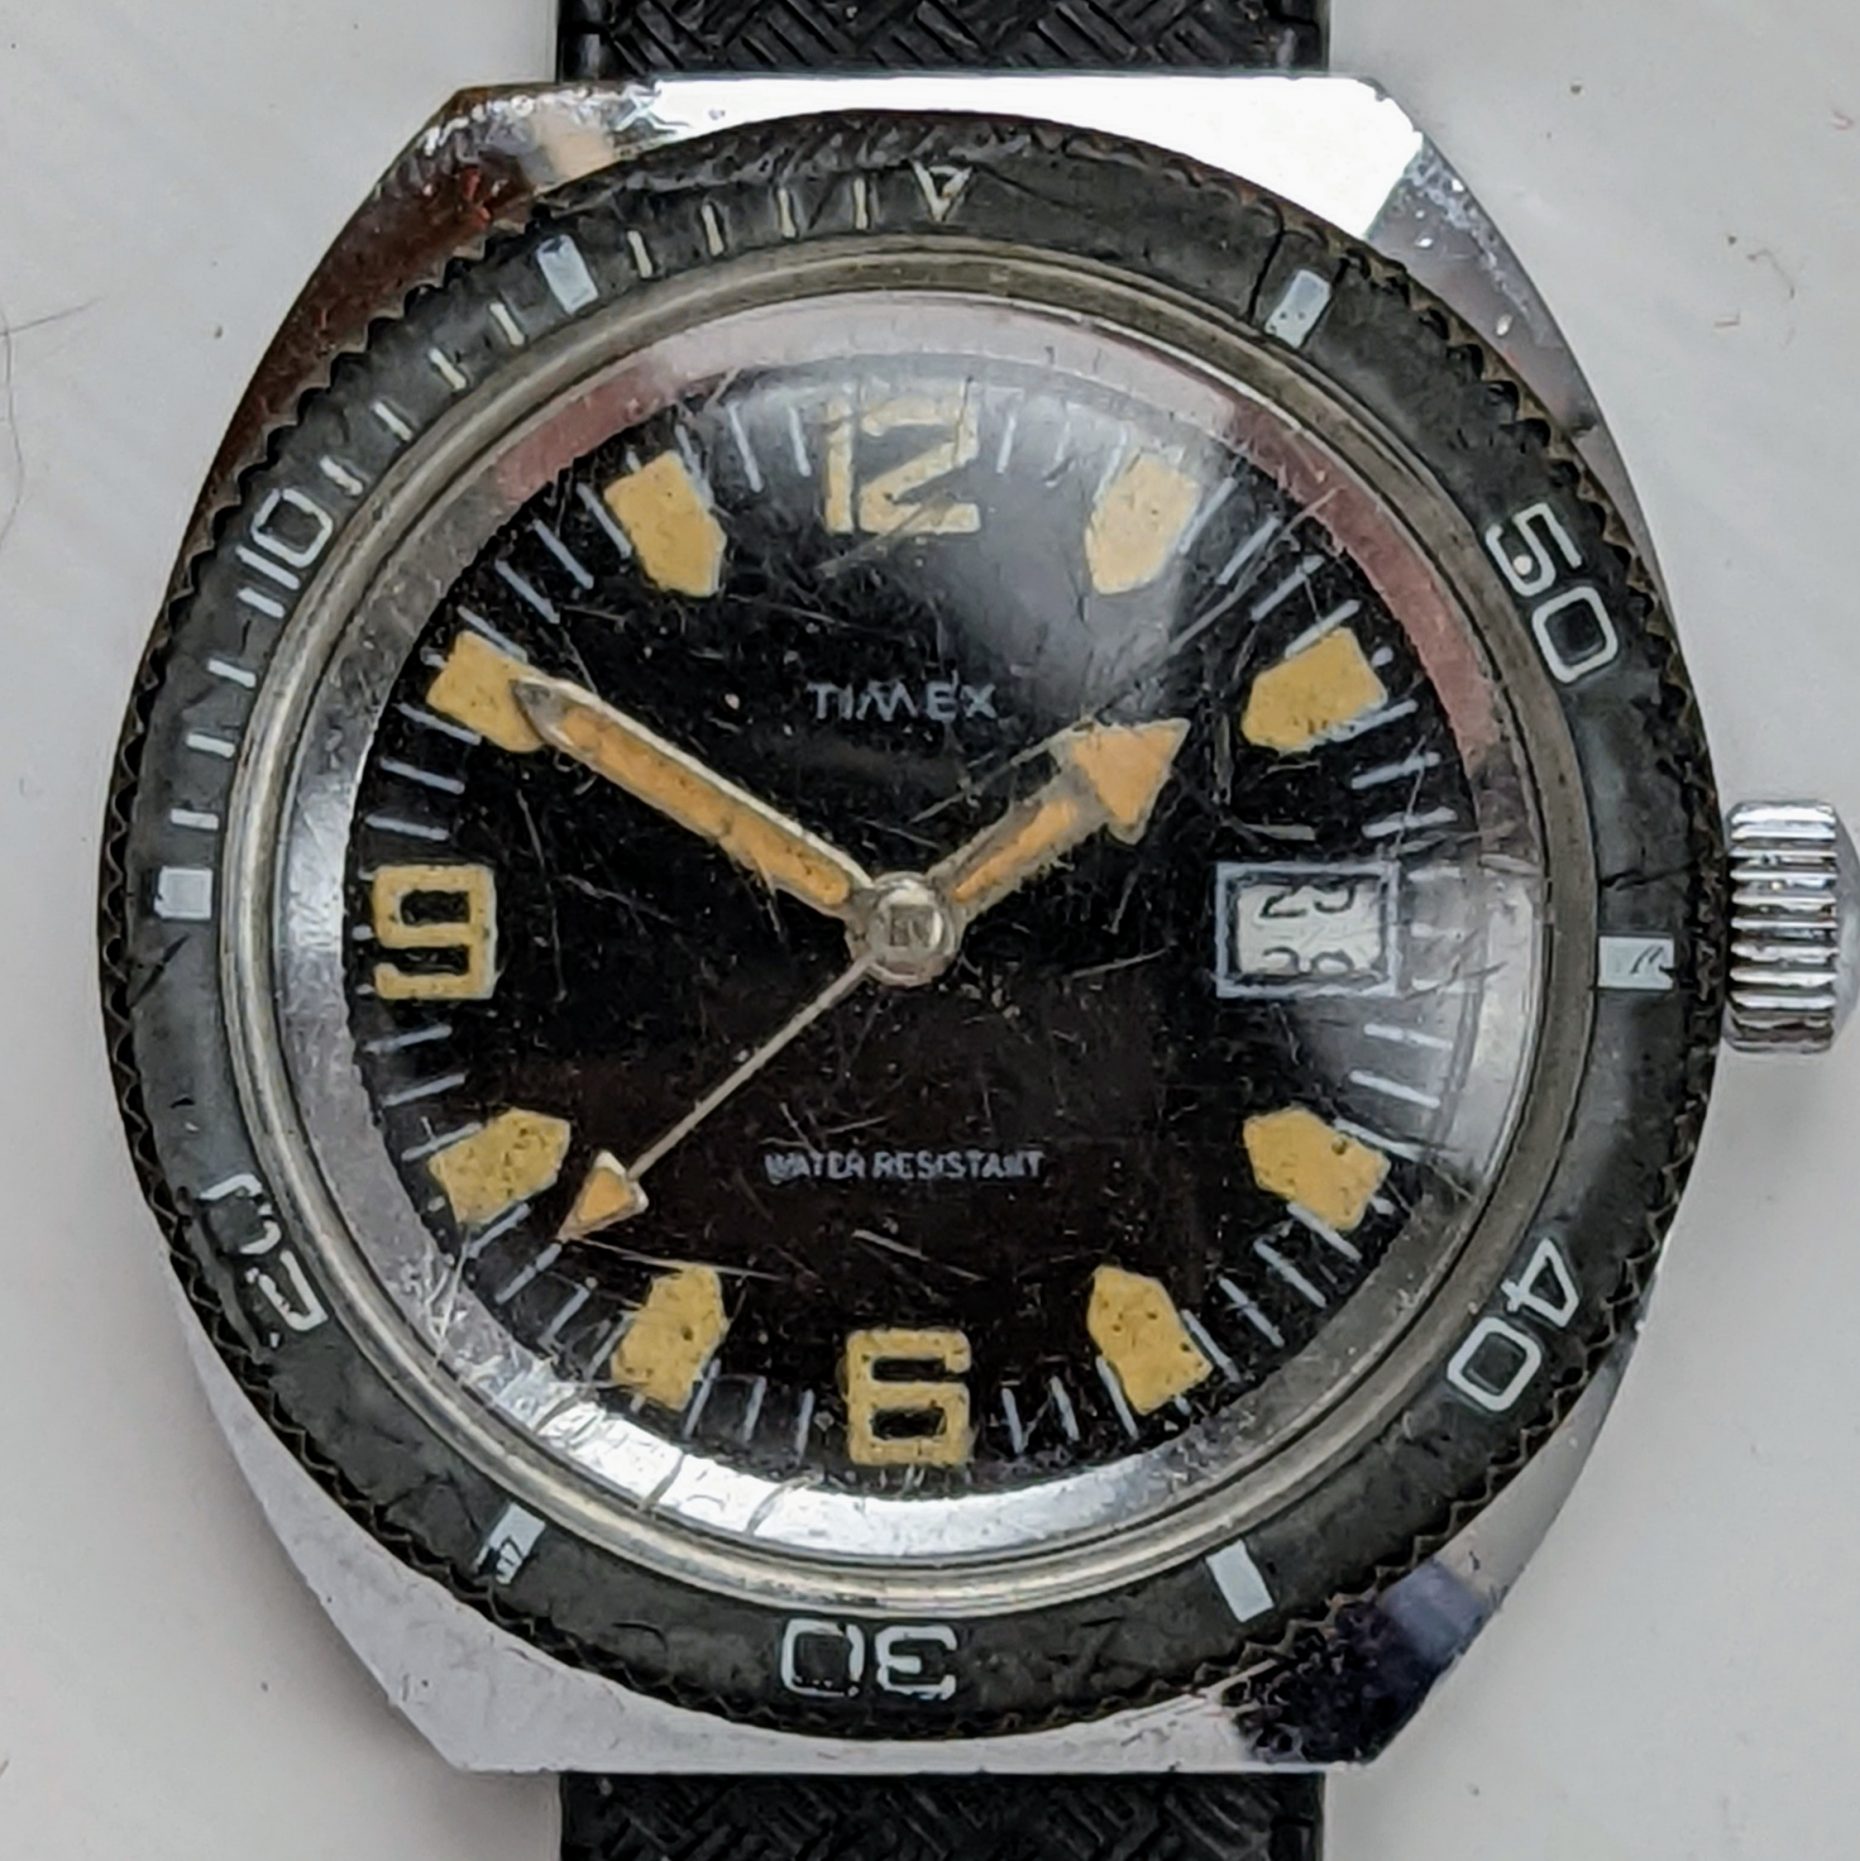 Timex Skindiver/Marlin 2277 2570 [1970]